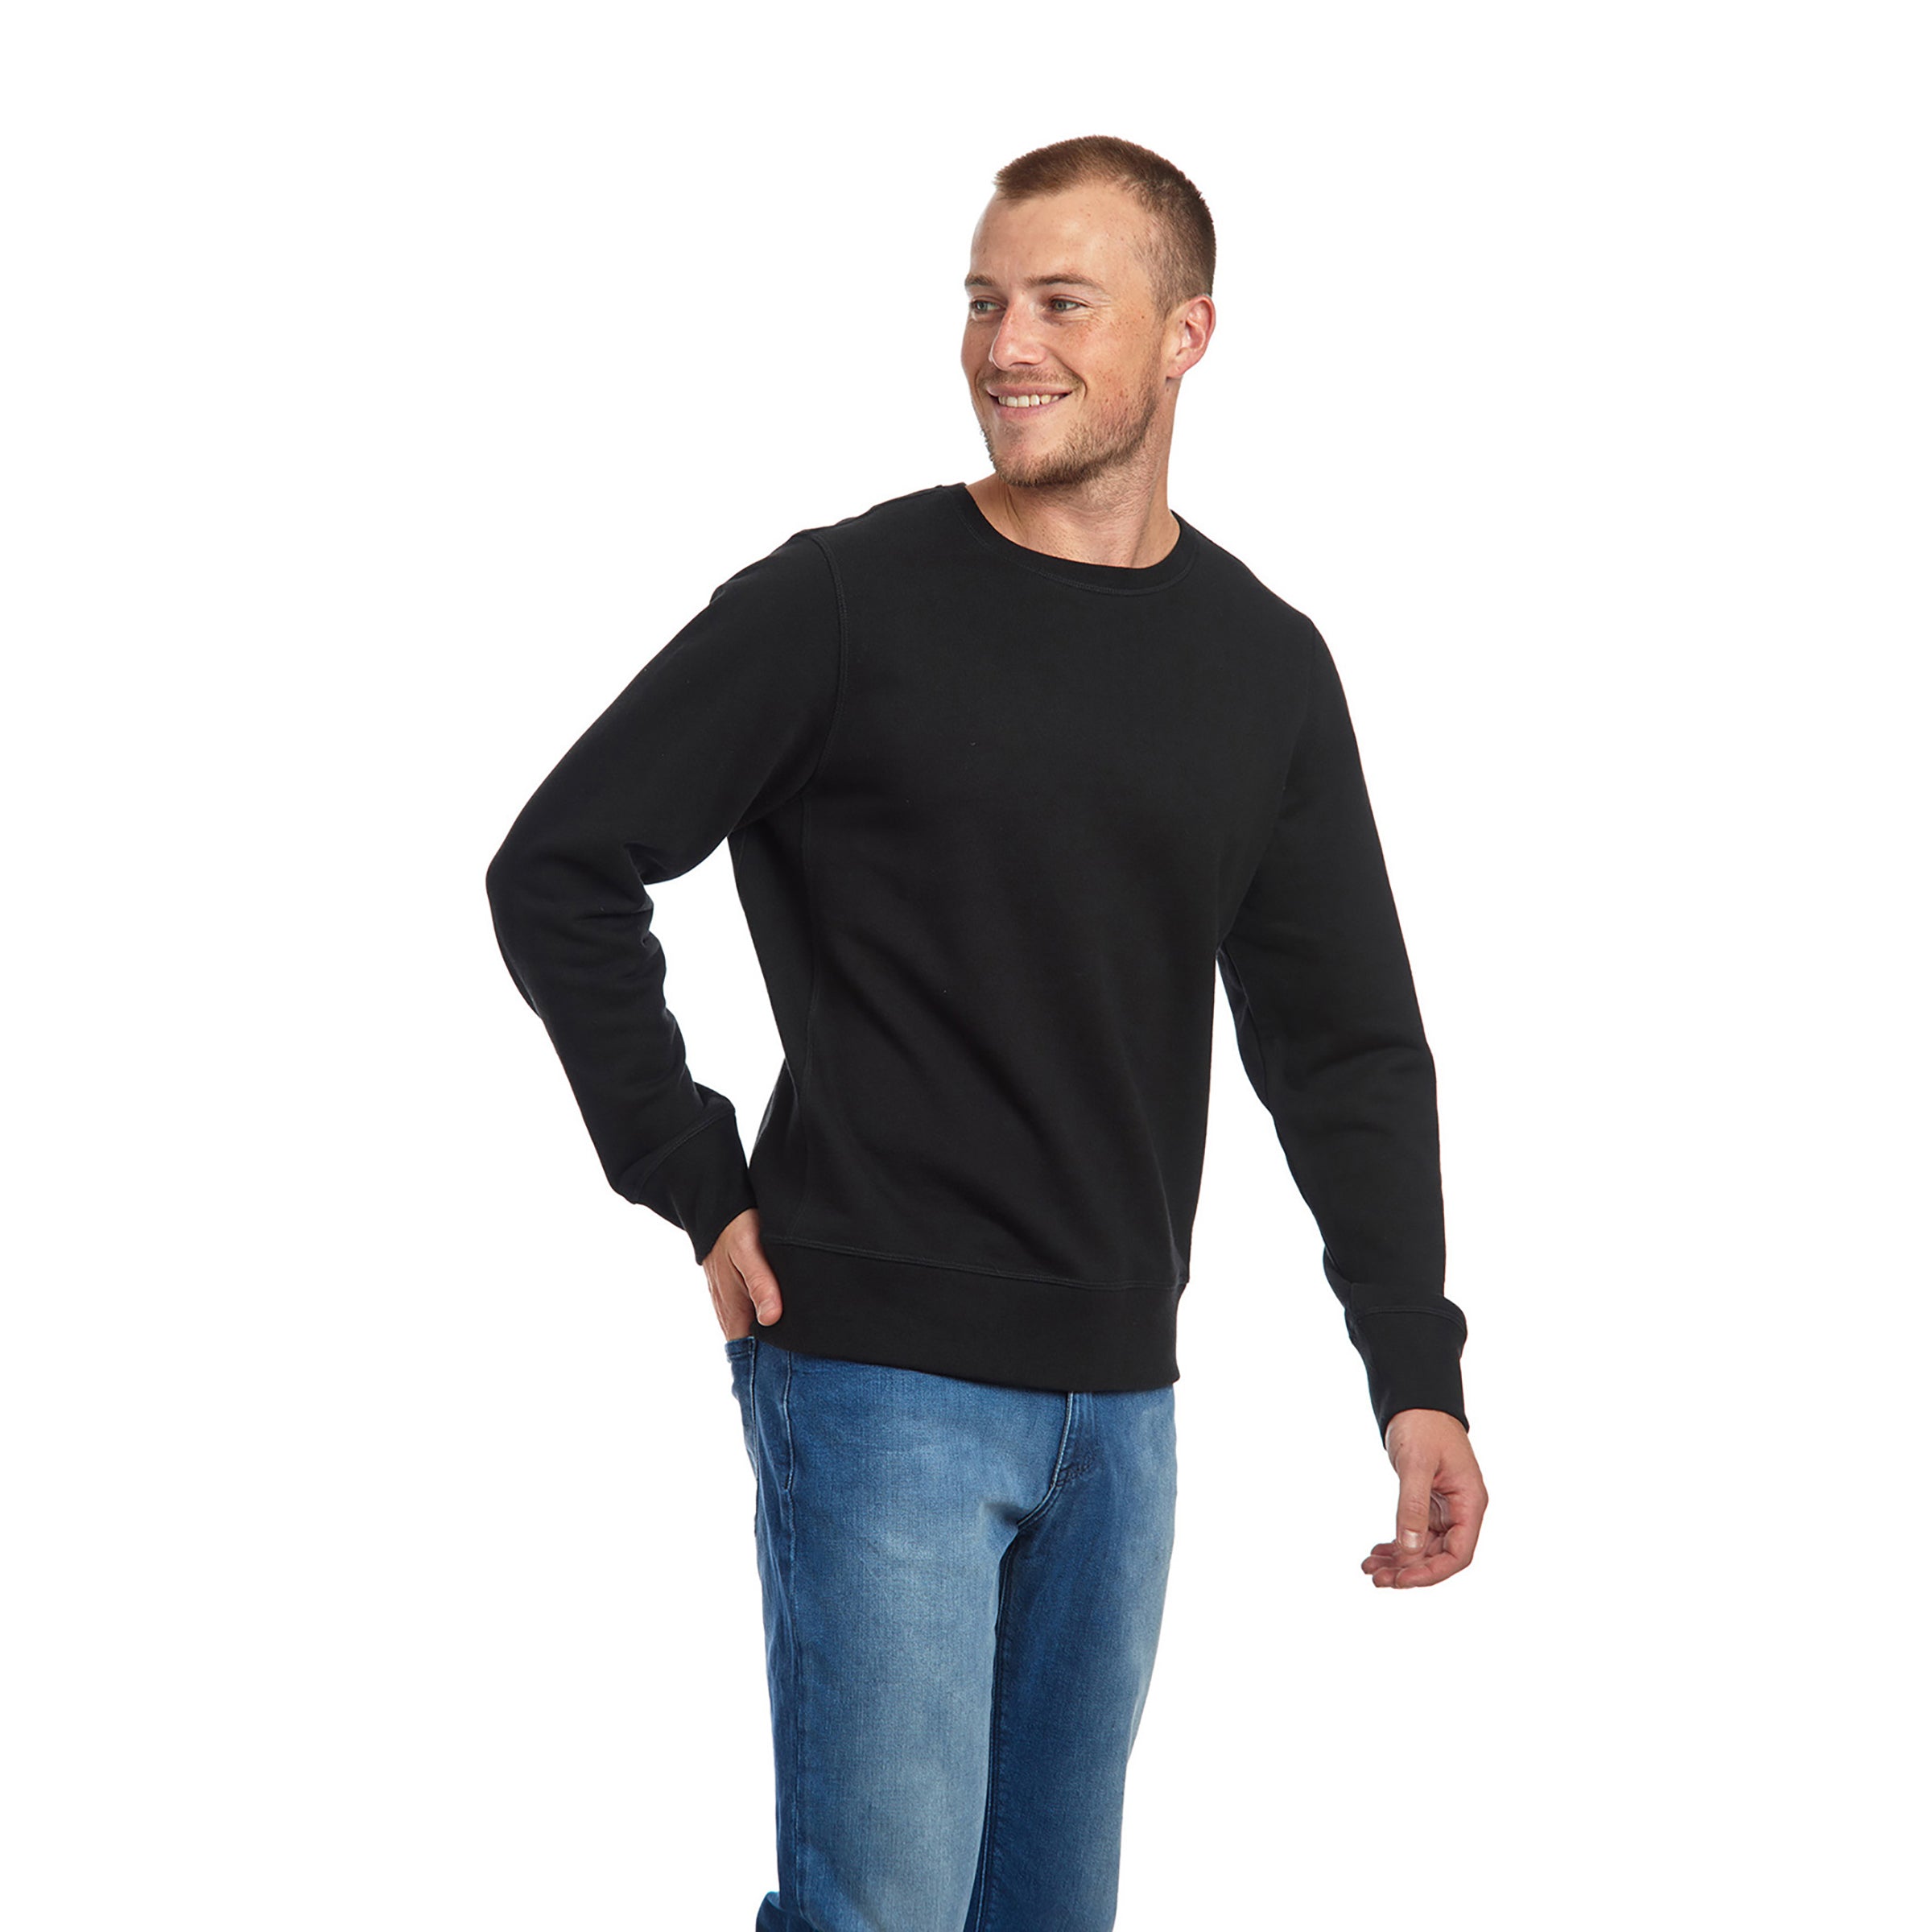 Men wearing Black The French Terry Sweatshirt Hooper